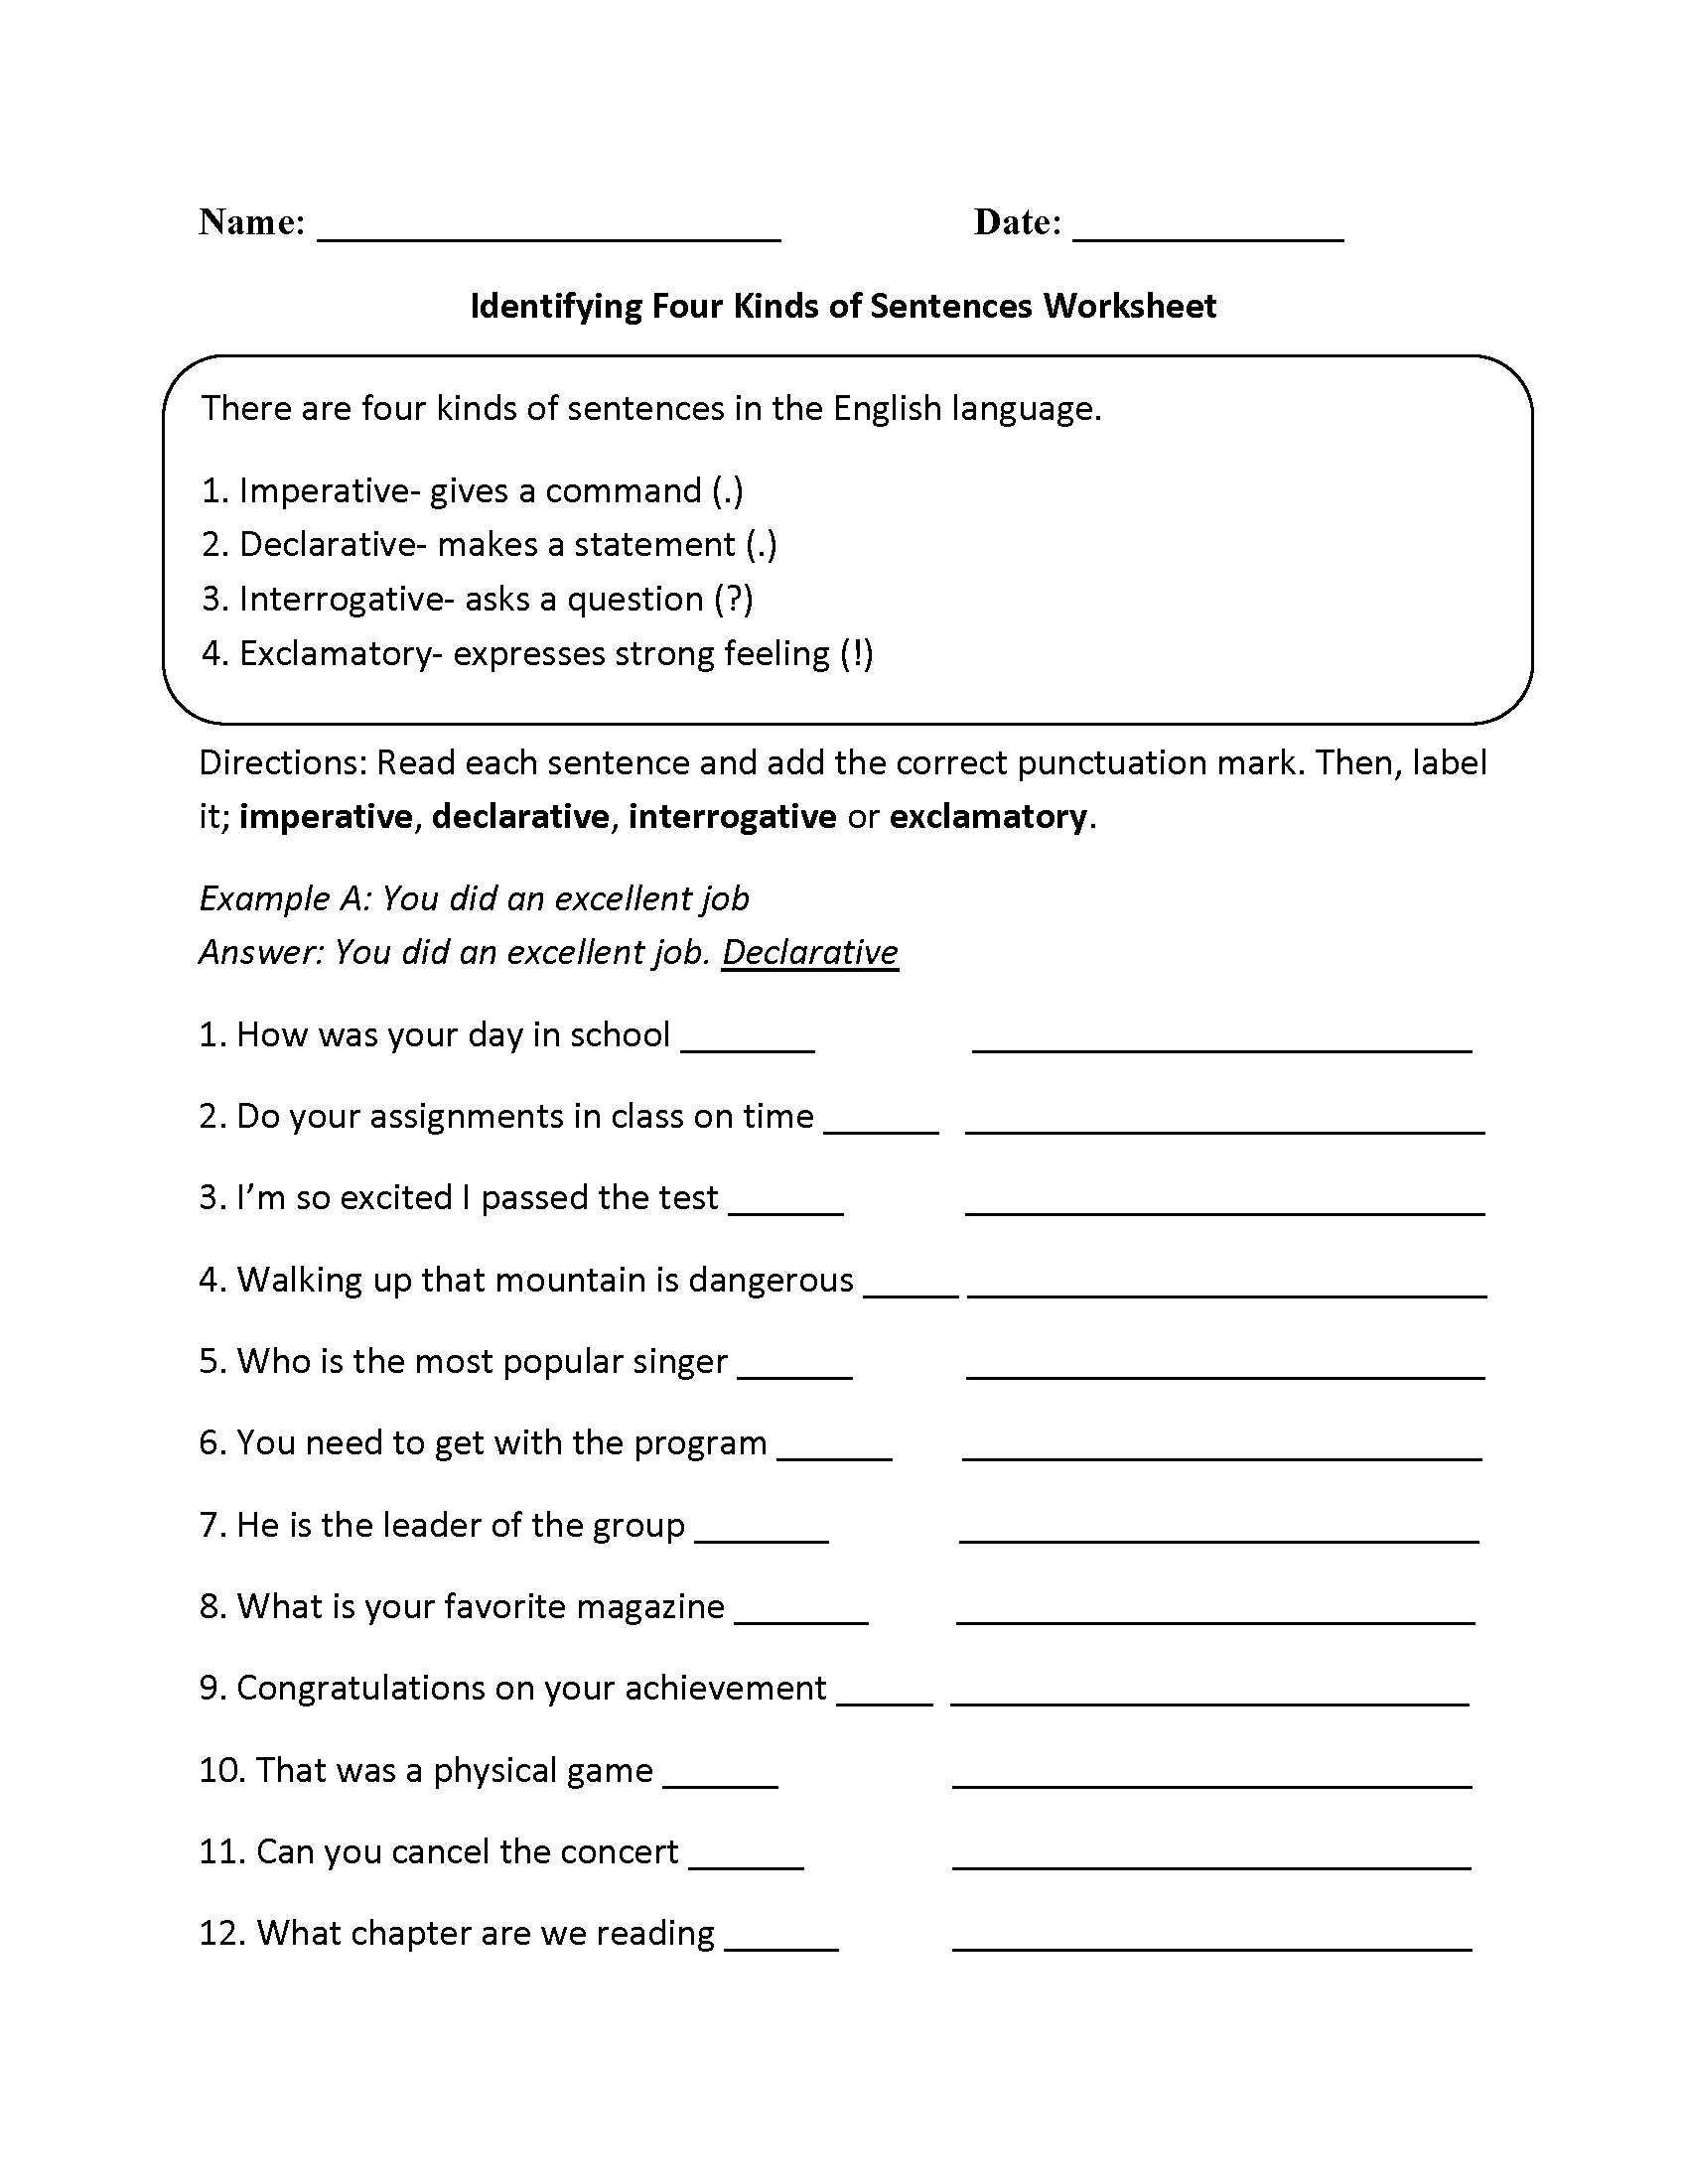 4 Types Of Sentence Worksheet